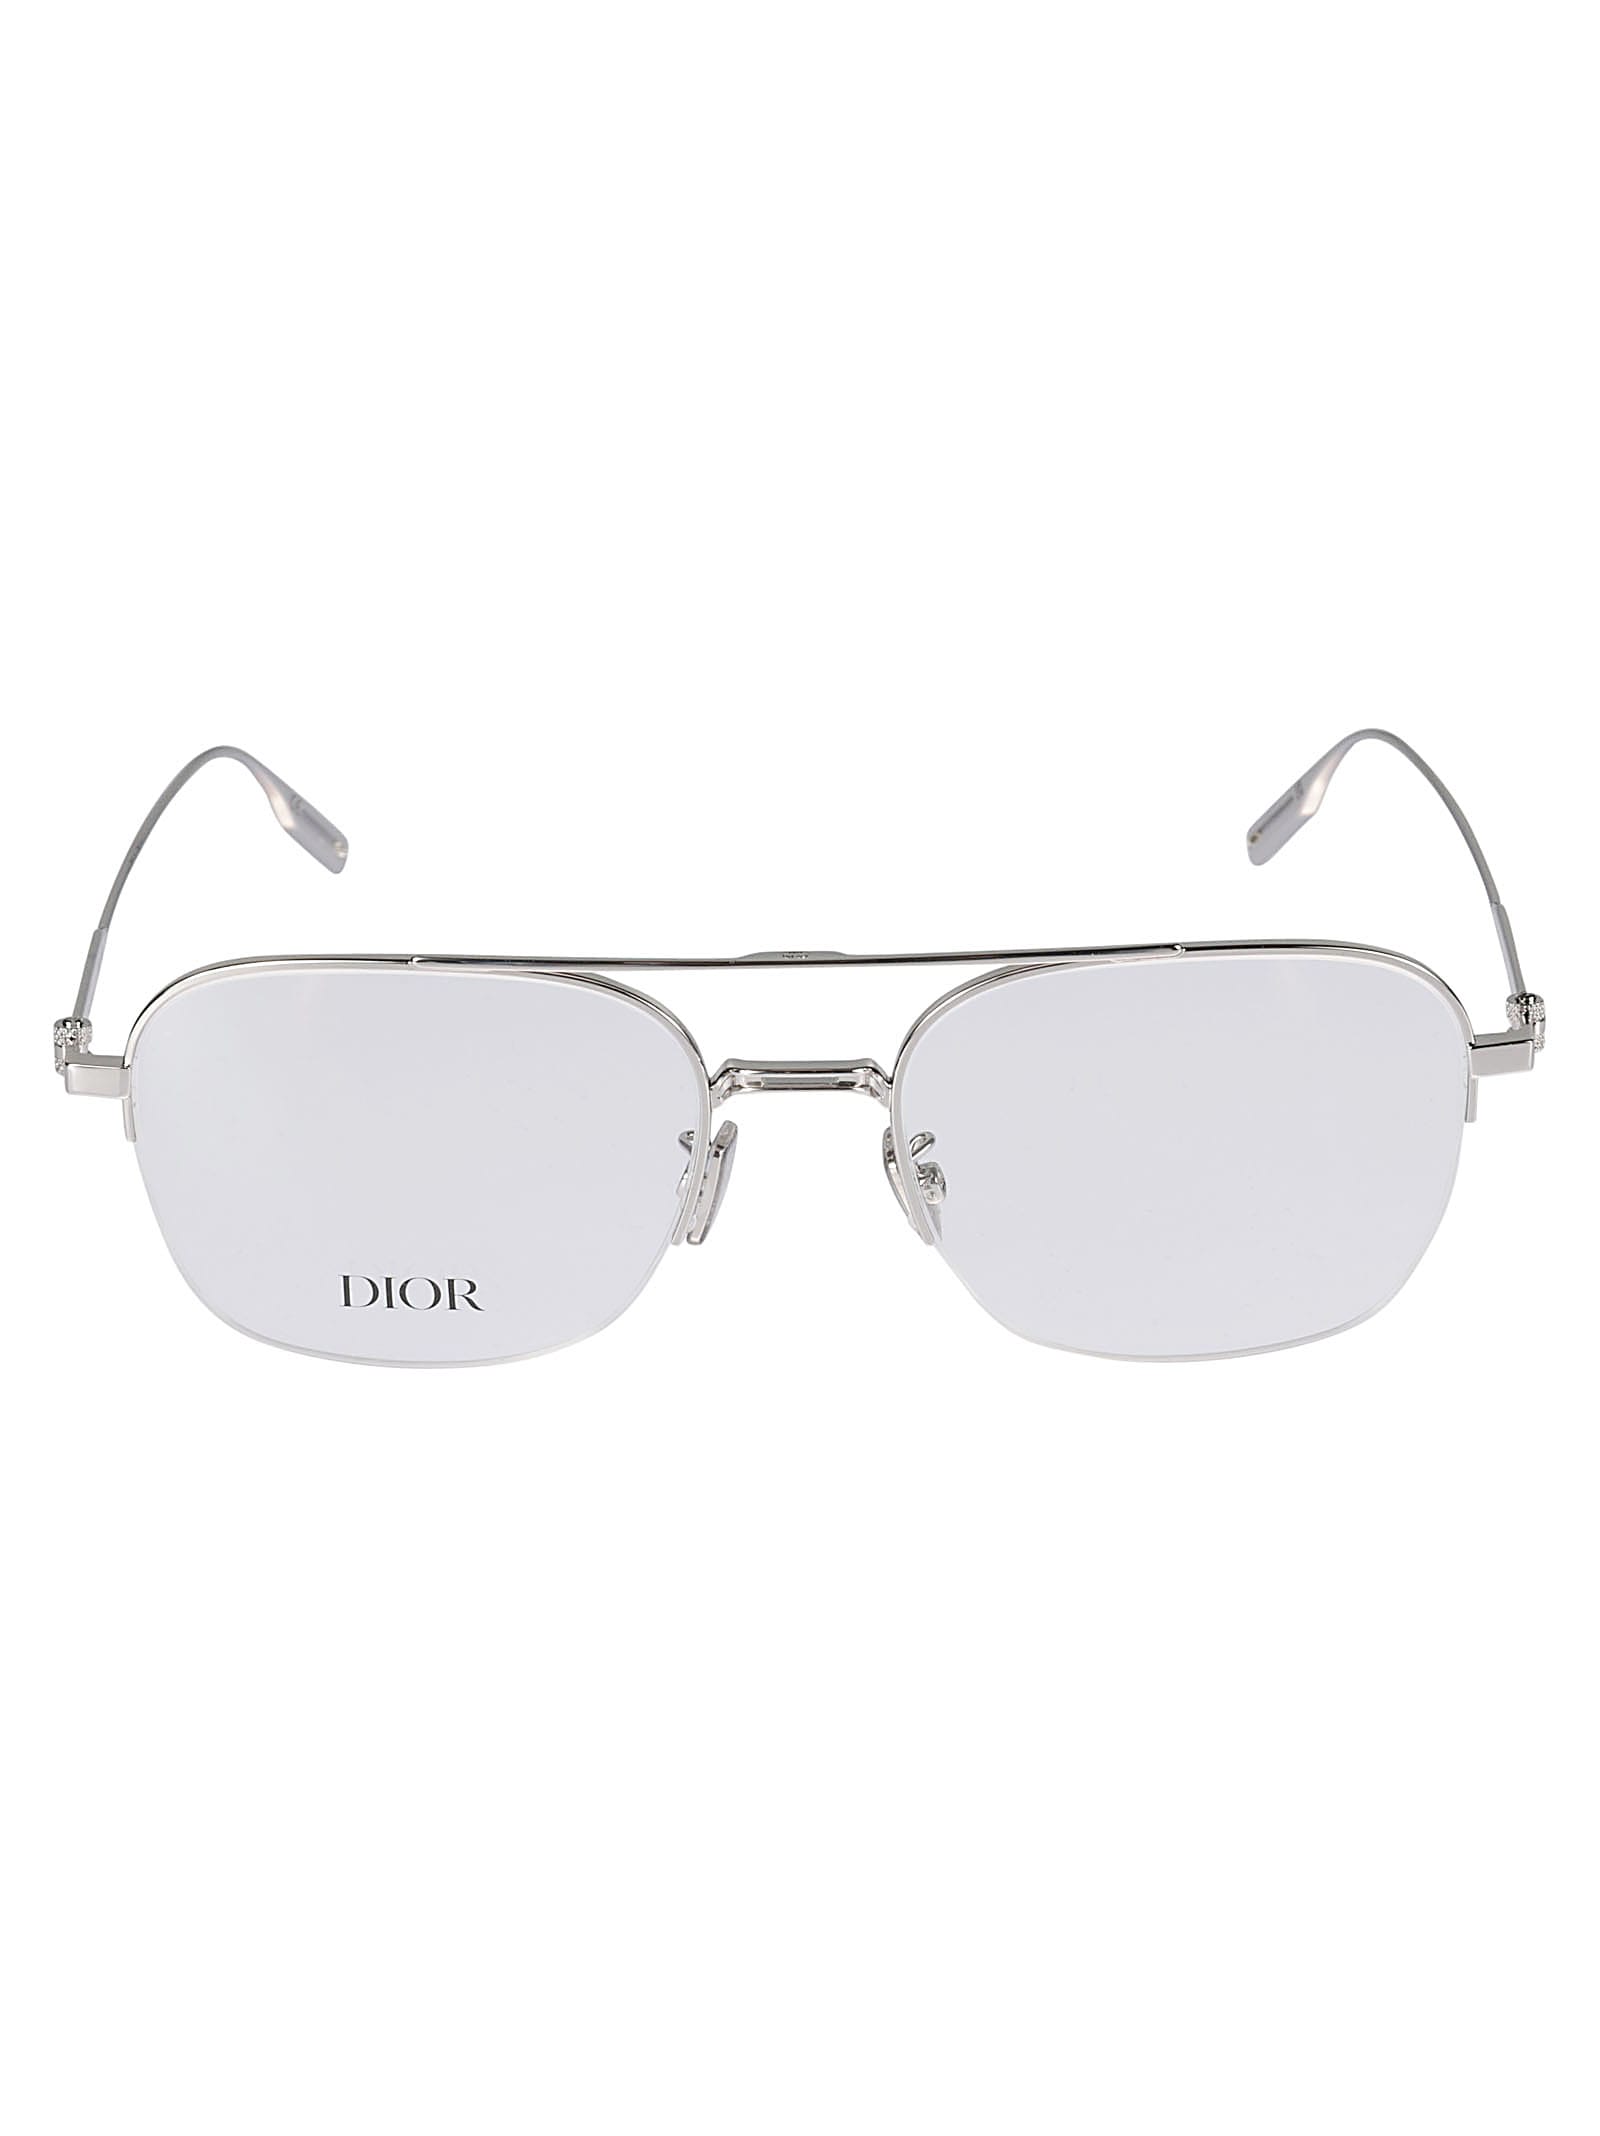 Dior Neo  Glasses In Metallic